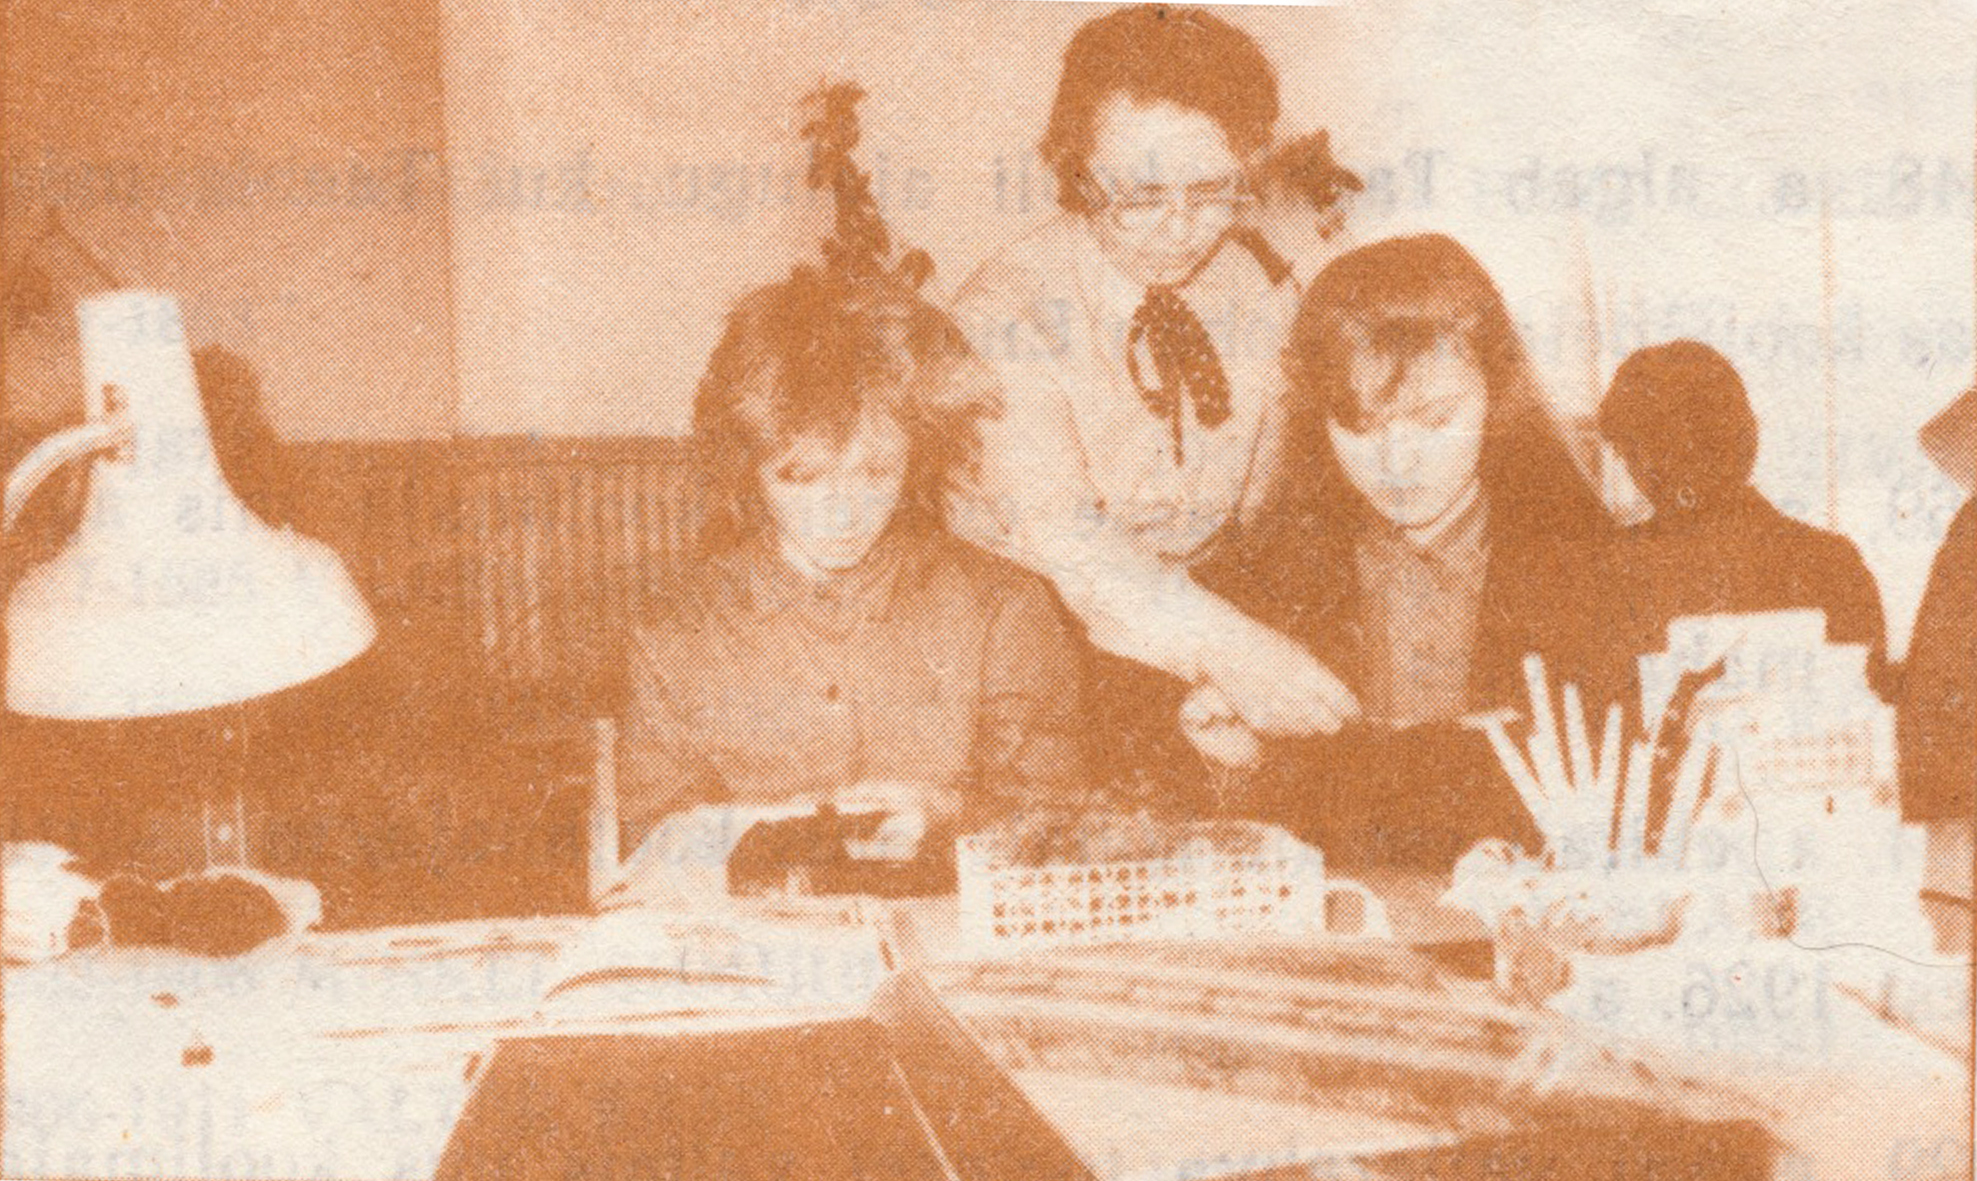 1985 a - Mari Treu in the handicraft circle, s.o. Asta and Mari Veske